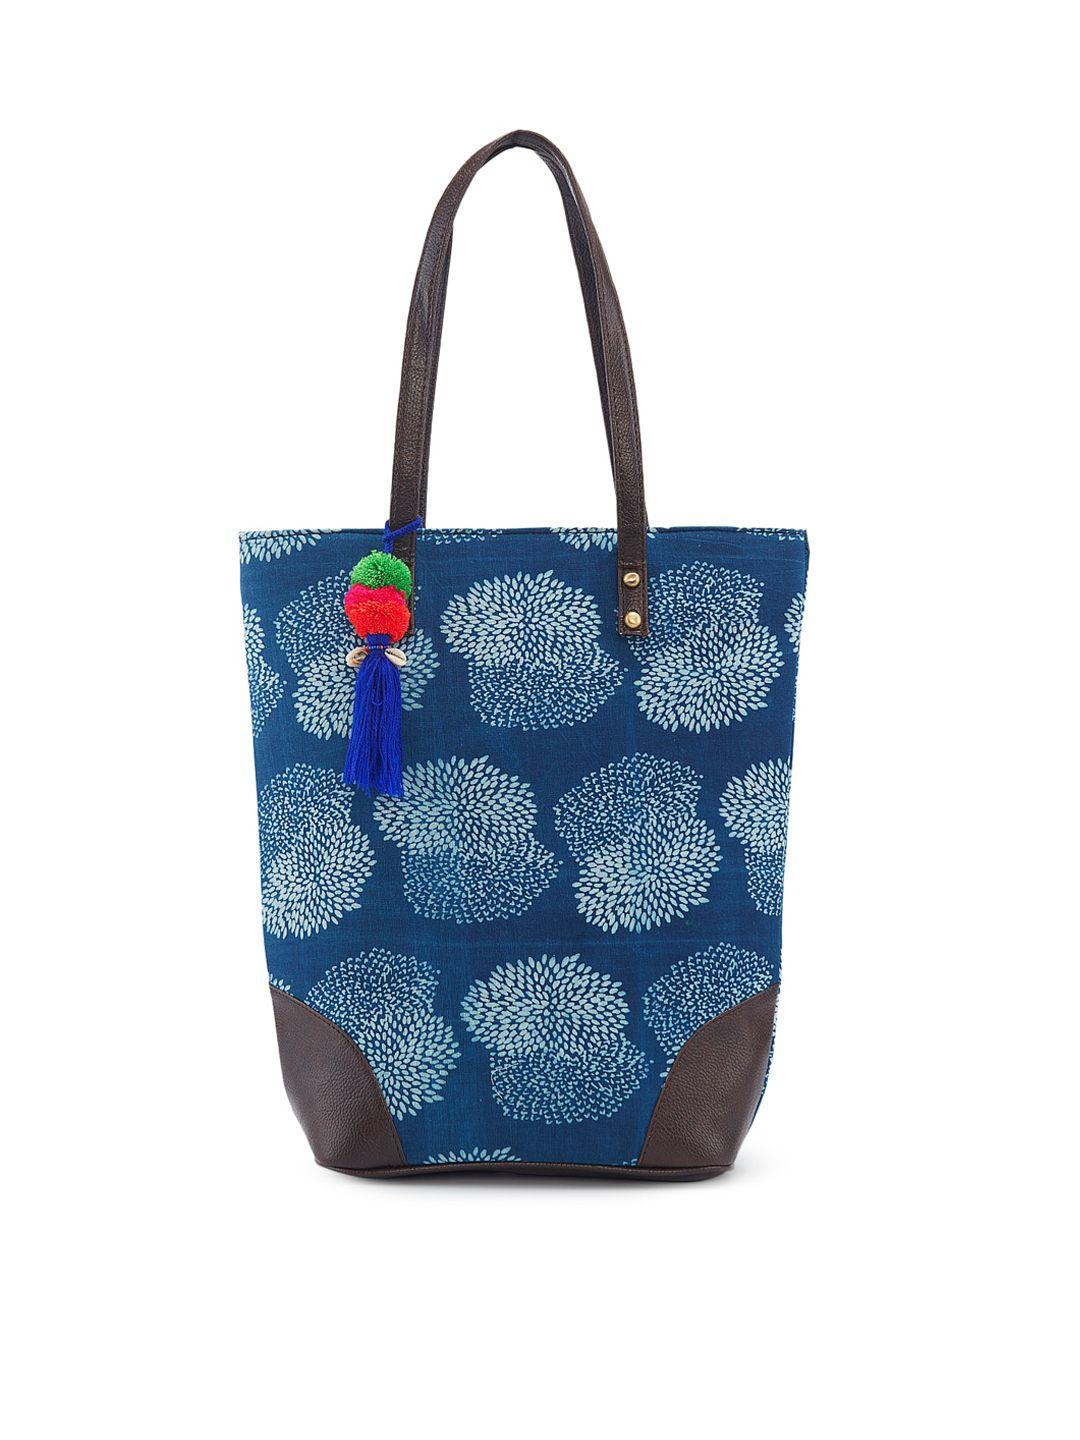 nepri floral printed shopper tote bag with tasselled